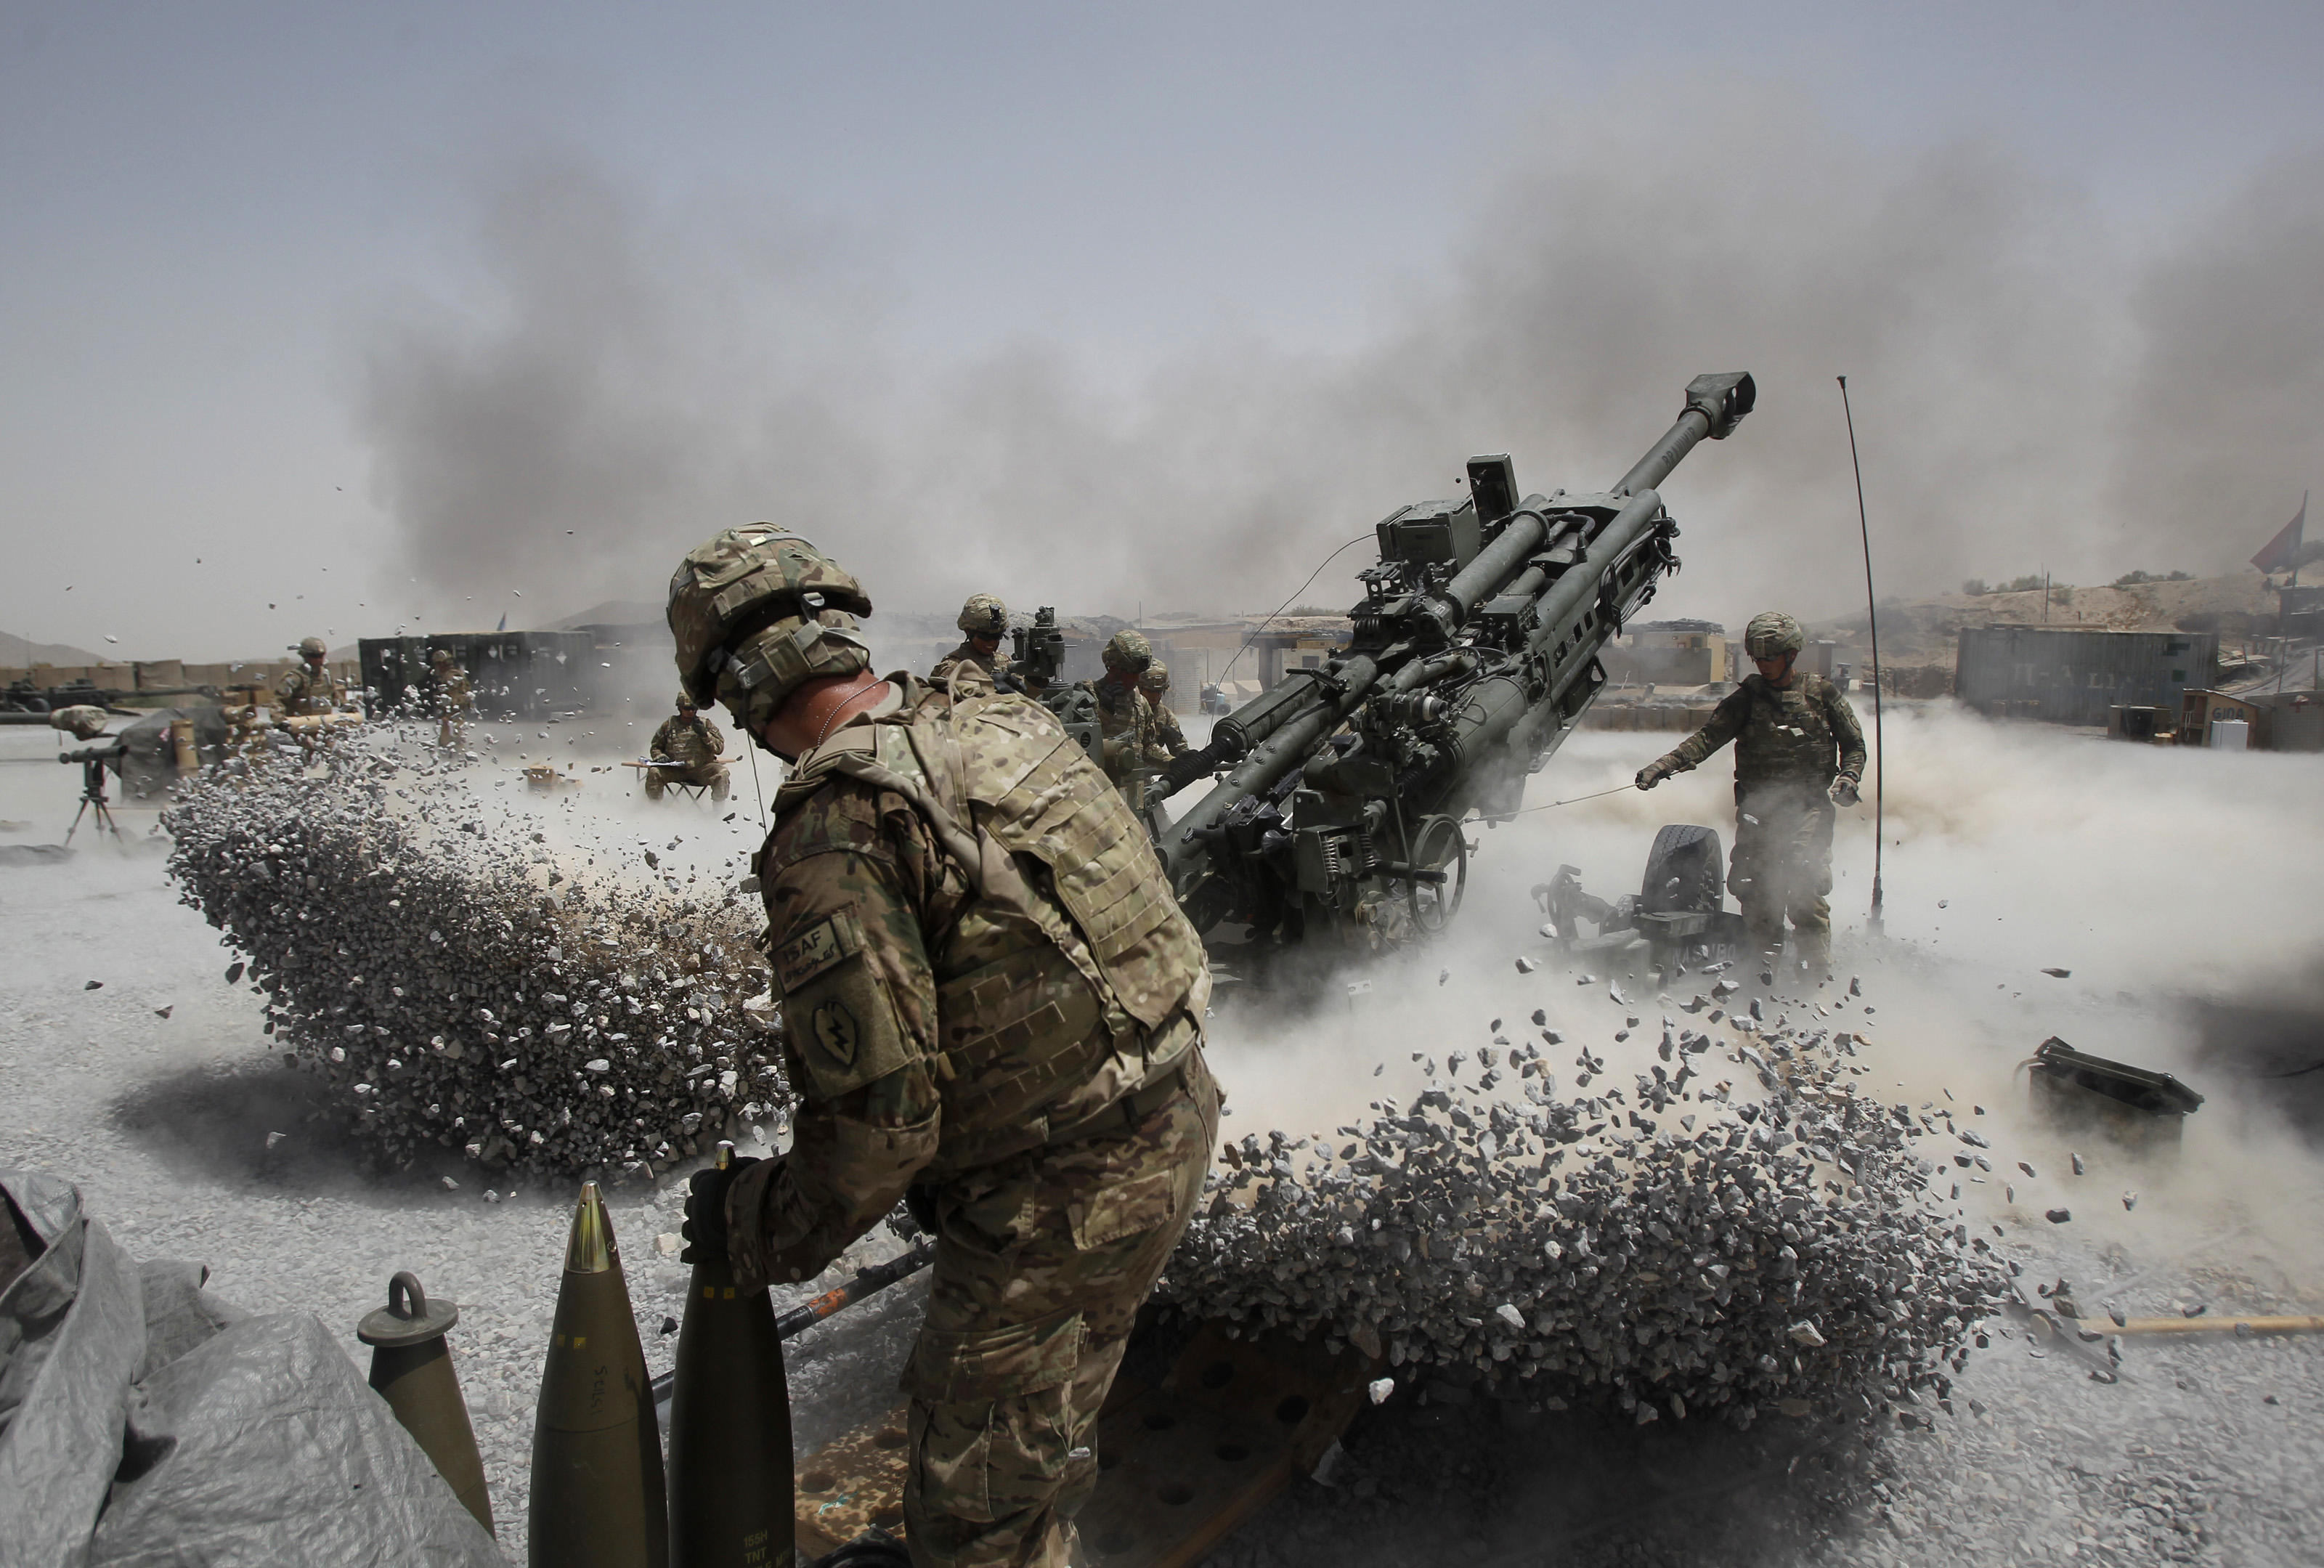 U.S. Army soldiers from the 2nd Platoon, B battery 2-8 field artillery, fire a howitzer artillery piece at Seprwan Ghar forward fire base in Panjwai district